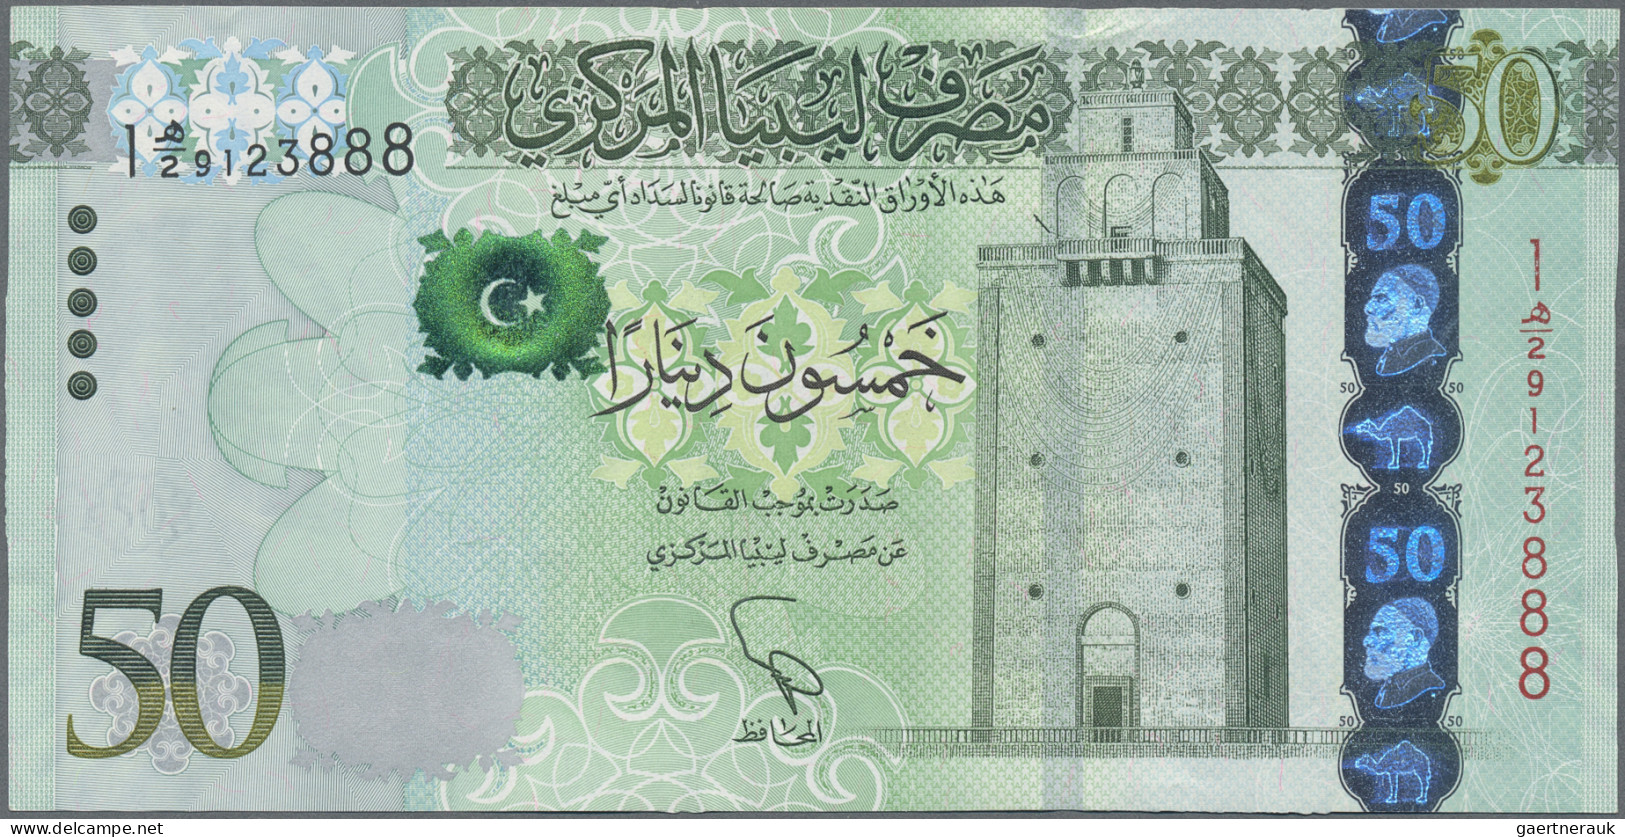 Libya: Central Bank of Libya, huge lot with 34 banknotes, series 1981-2015, comp